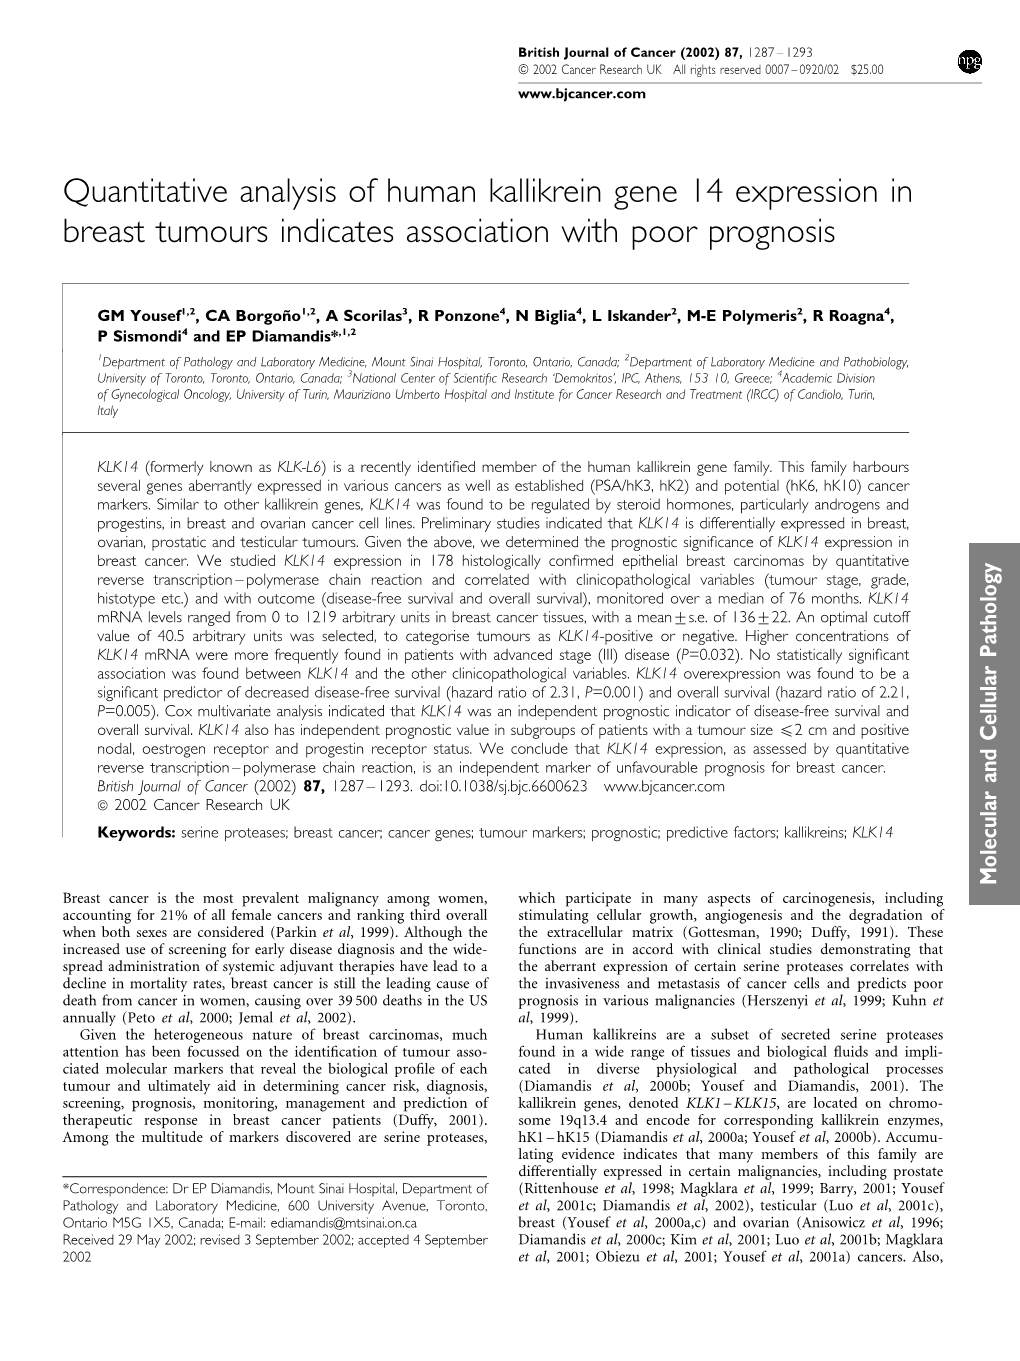 Quantitative Analysis of Human Kallikrein Gene 14 Expression in Breast Tumours Indicates Association with Poor Prognosis